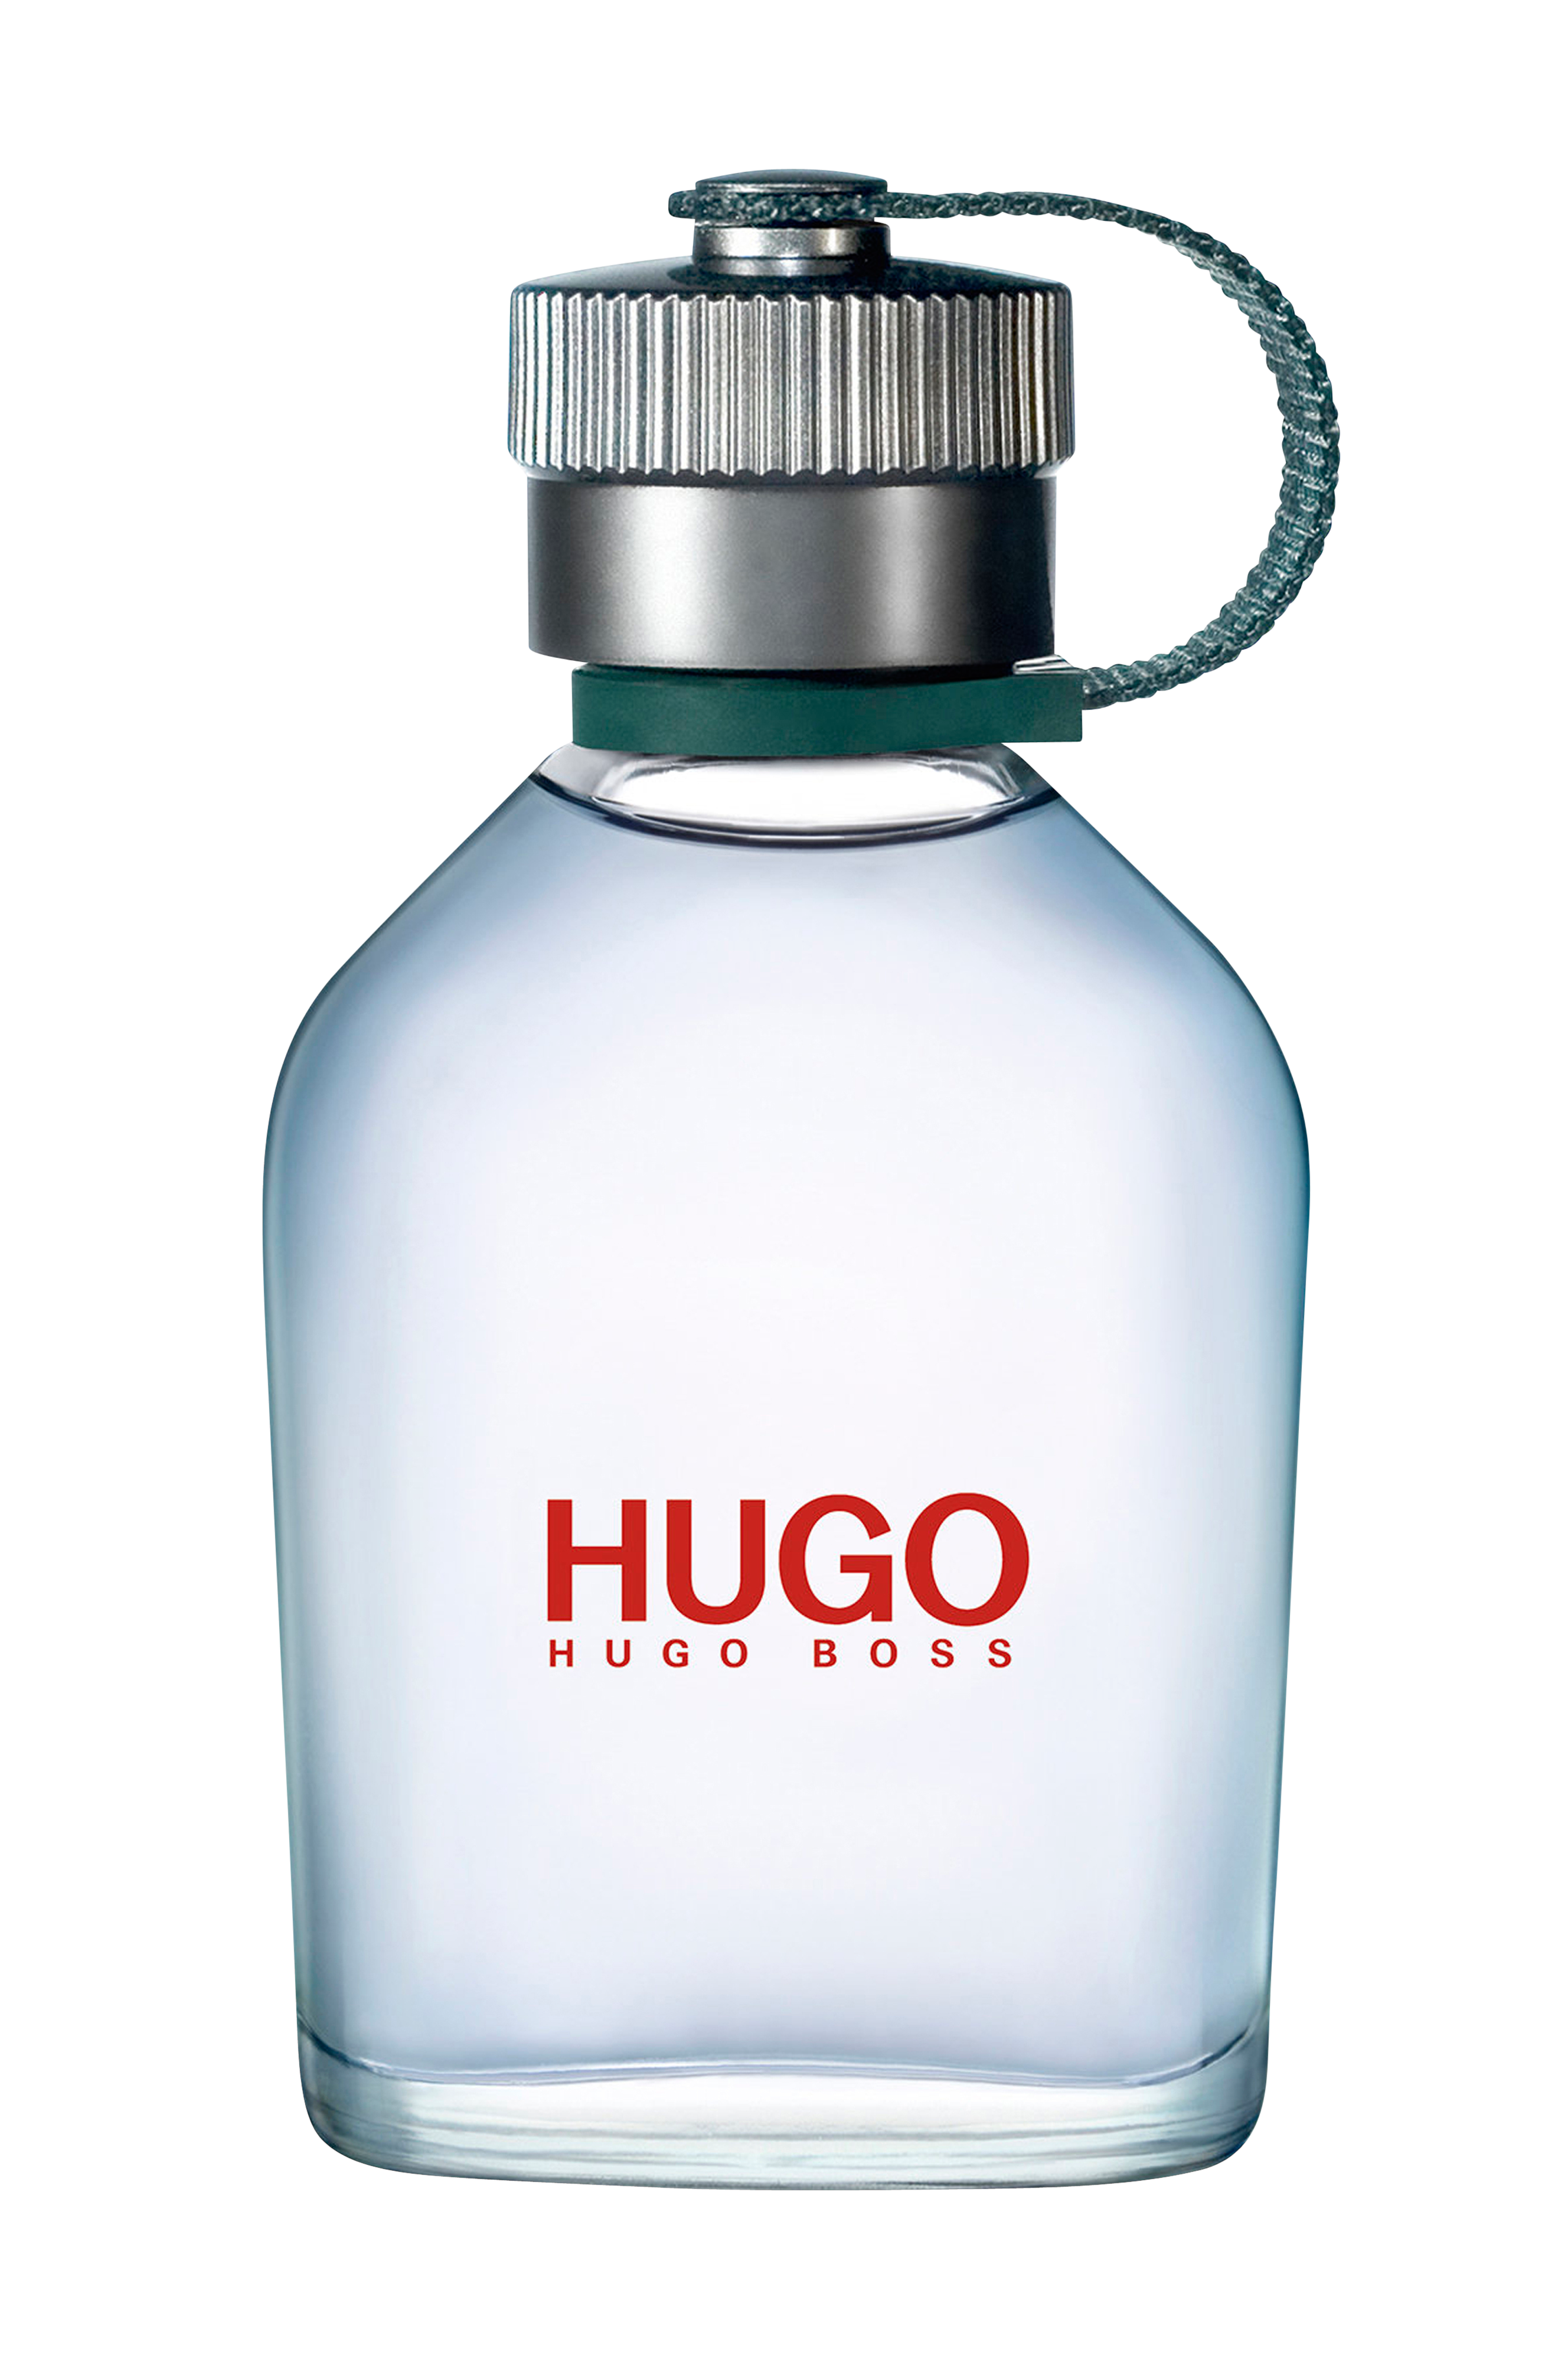 Boss hugo boss описание аромата. Hugo Boss Hugo men 100 мл. Тестер Boss Hugo Boss Eau de Toilette 100 ml. Boss Hugo Boss man туалетная вода 100 мл. Туалетная вода Hugo Boss Hugo man, 150 мл.